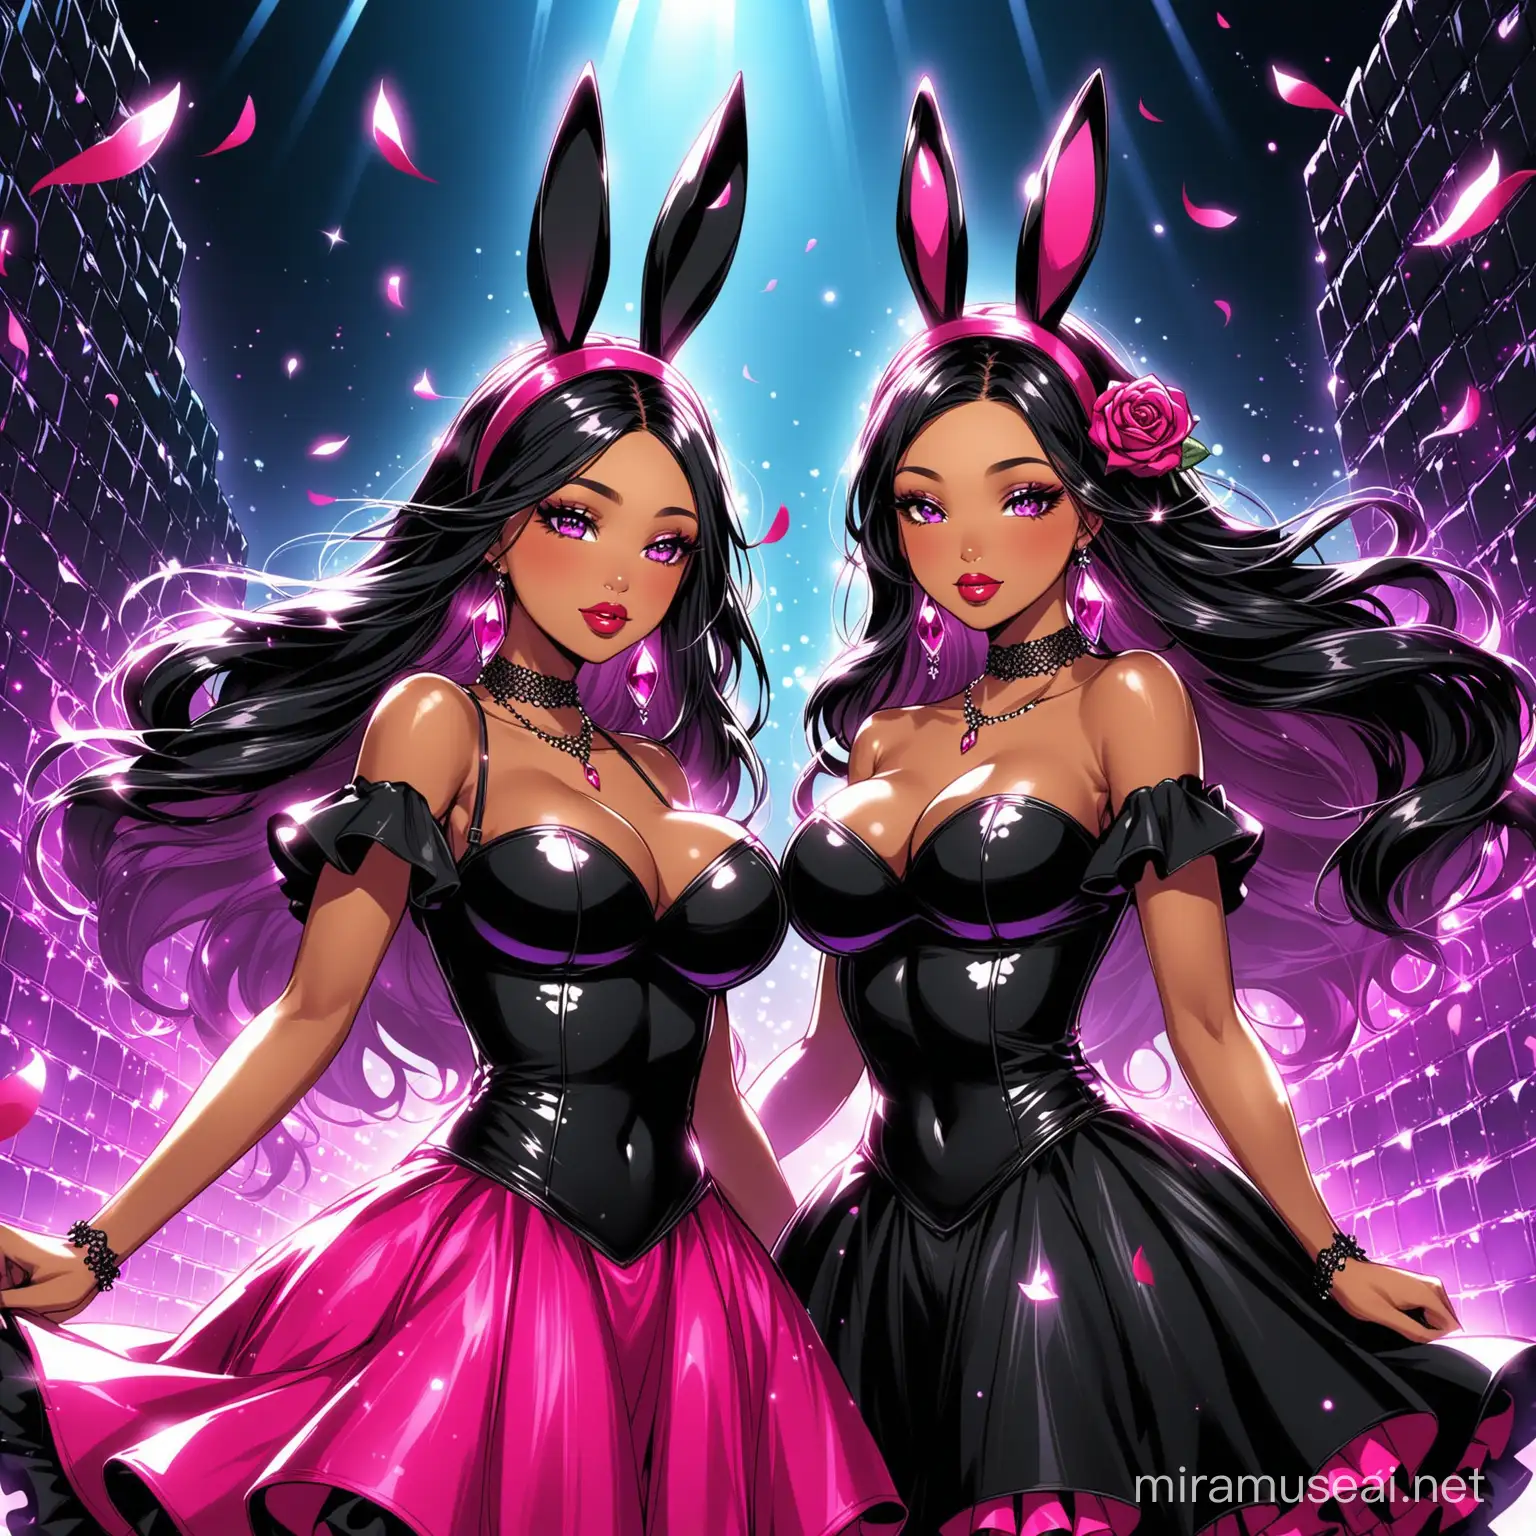 Dark Fantasy Cartoon Goddesses in Nightclub with Black and Red Rose Wall